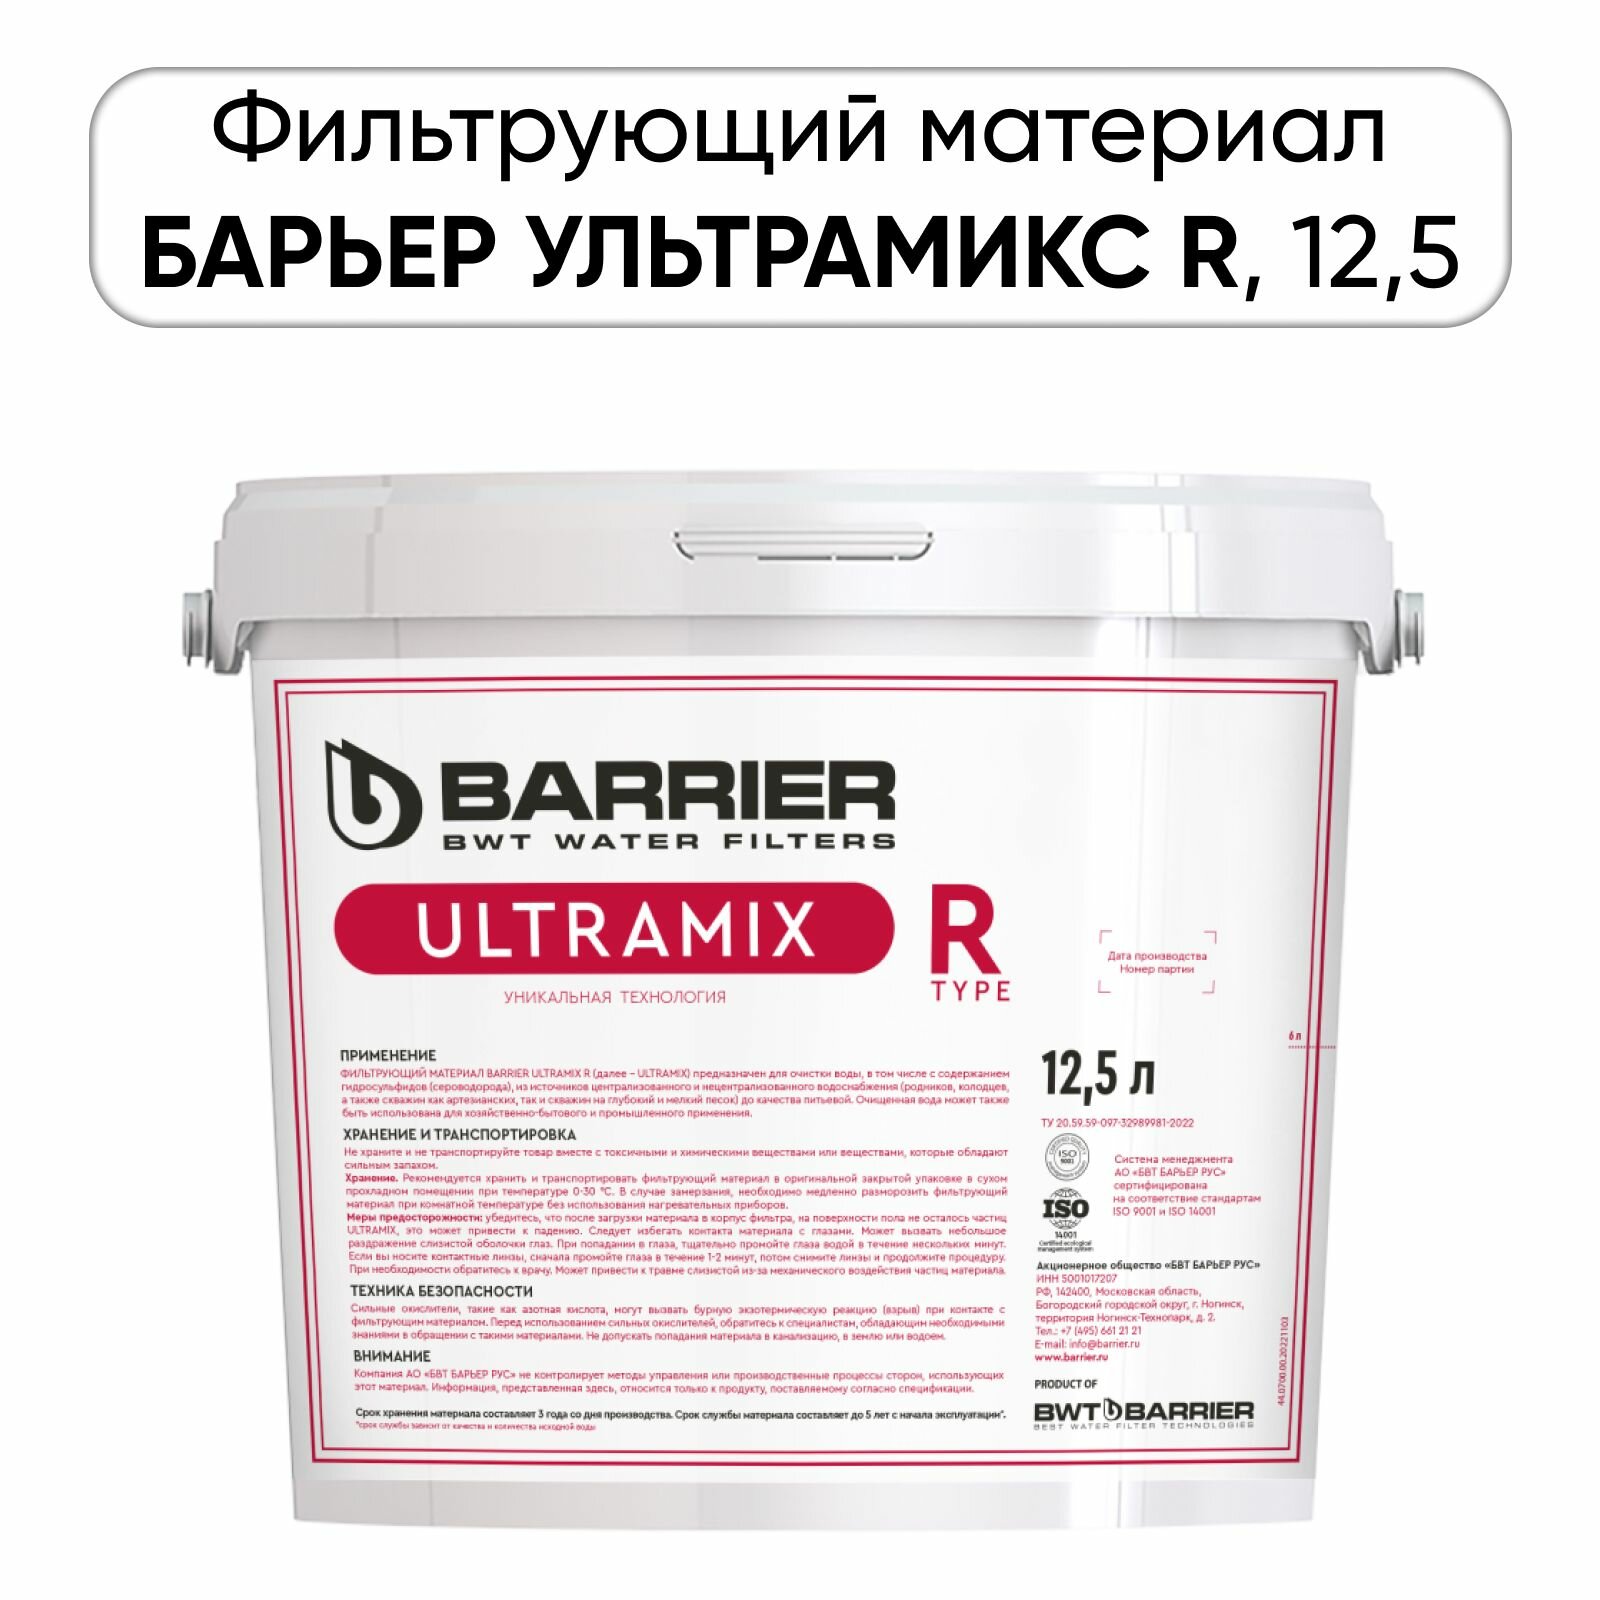 Фильтрующий материал БАРЬЕР ультрамикс R, 12,5л